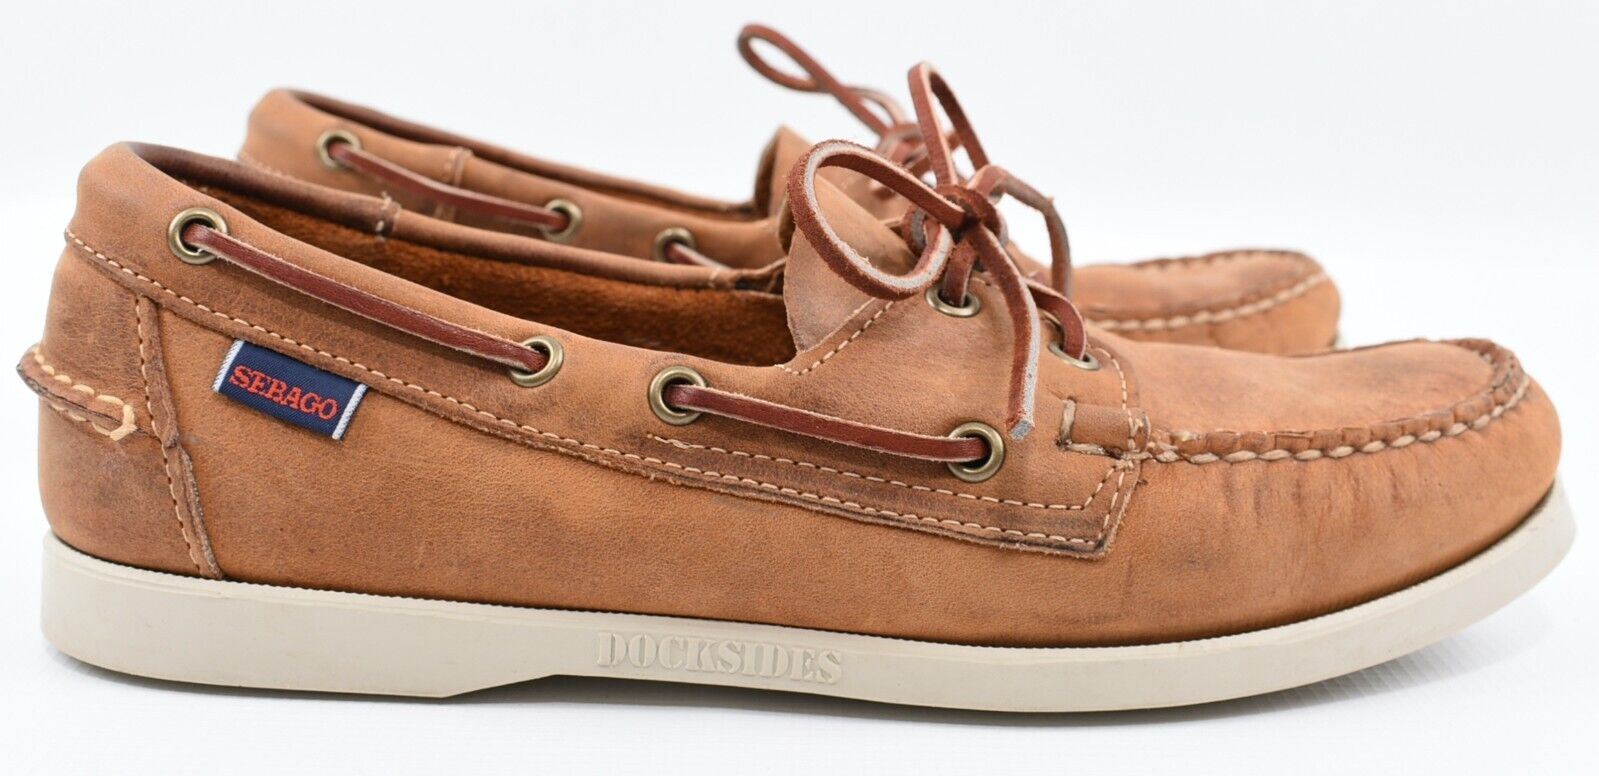 SEBAGO - CAMPSIDES Men's Brown Leather Boat Shoes, size UK 7 /EU 41 *Used - VGC*